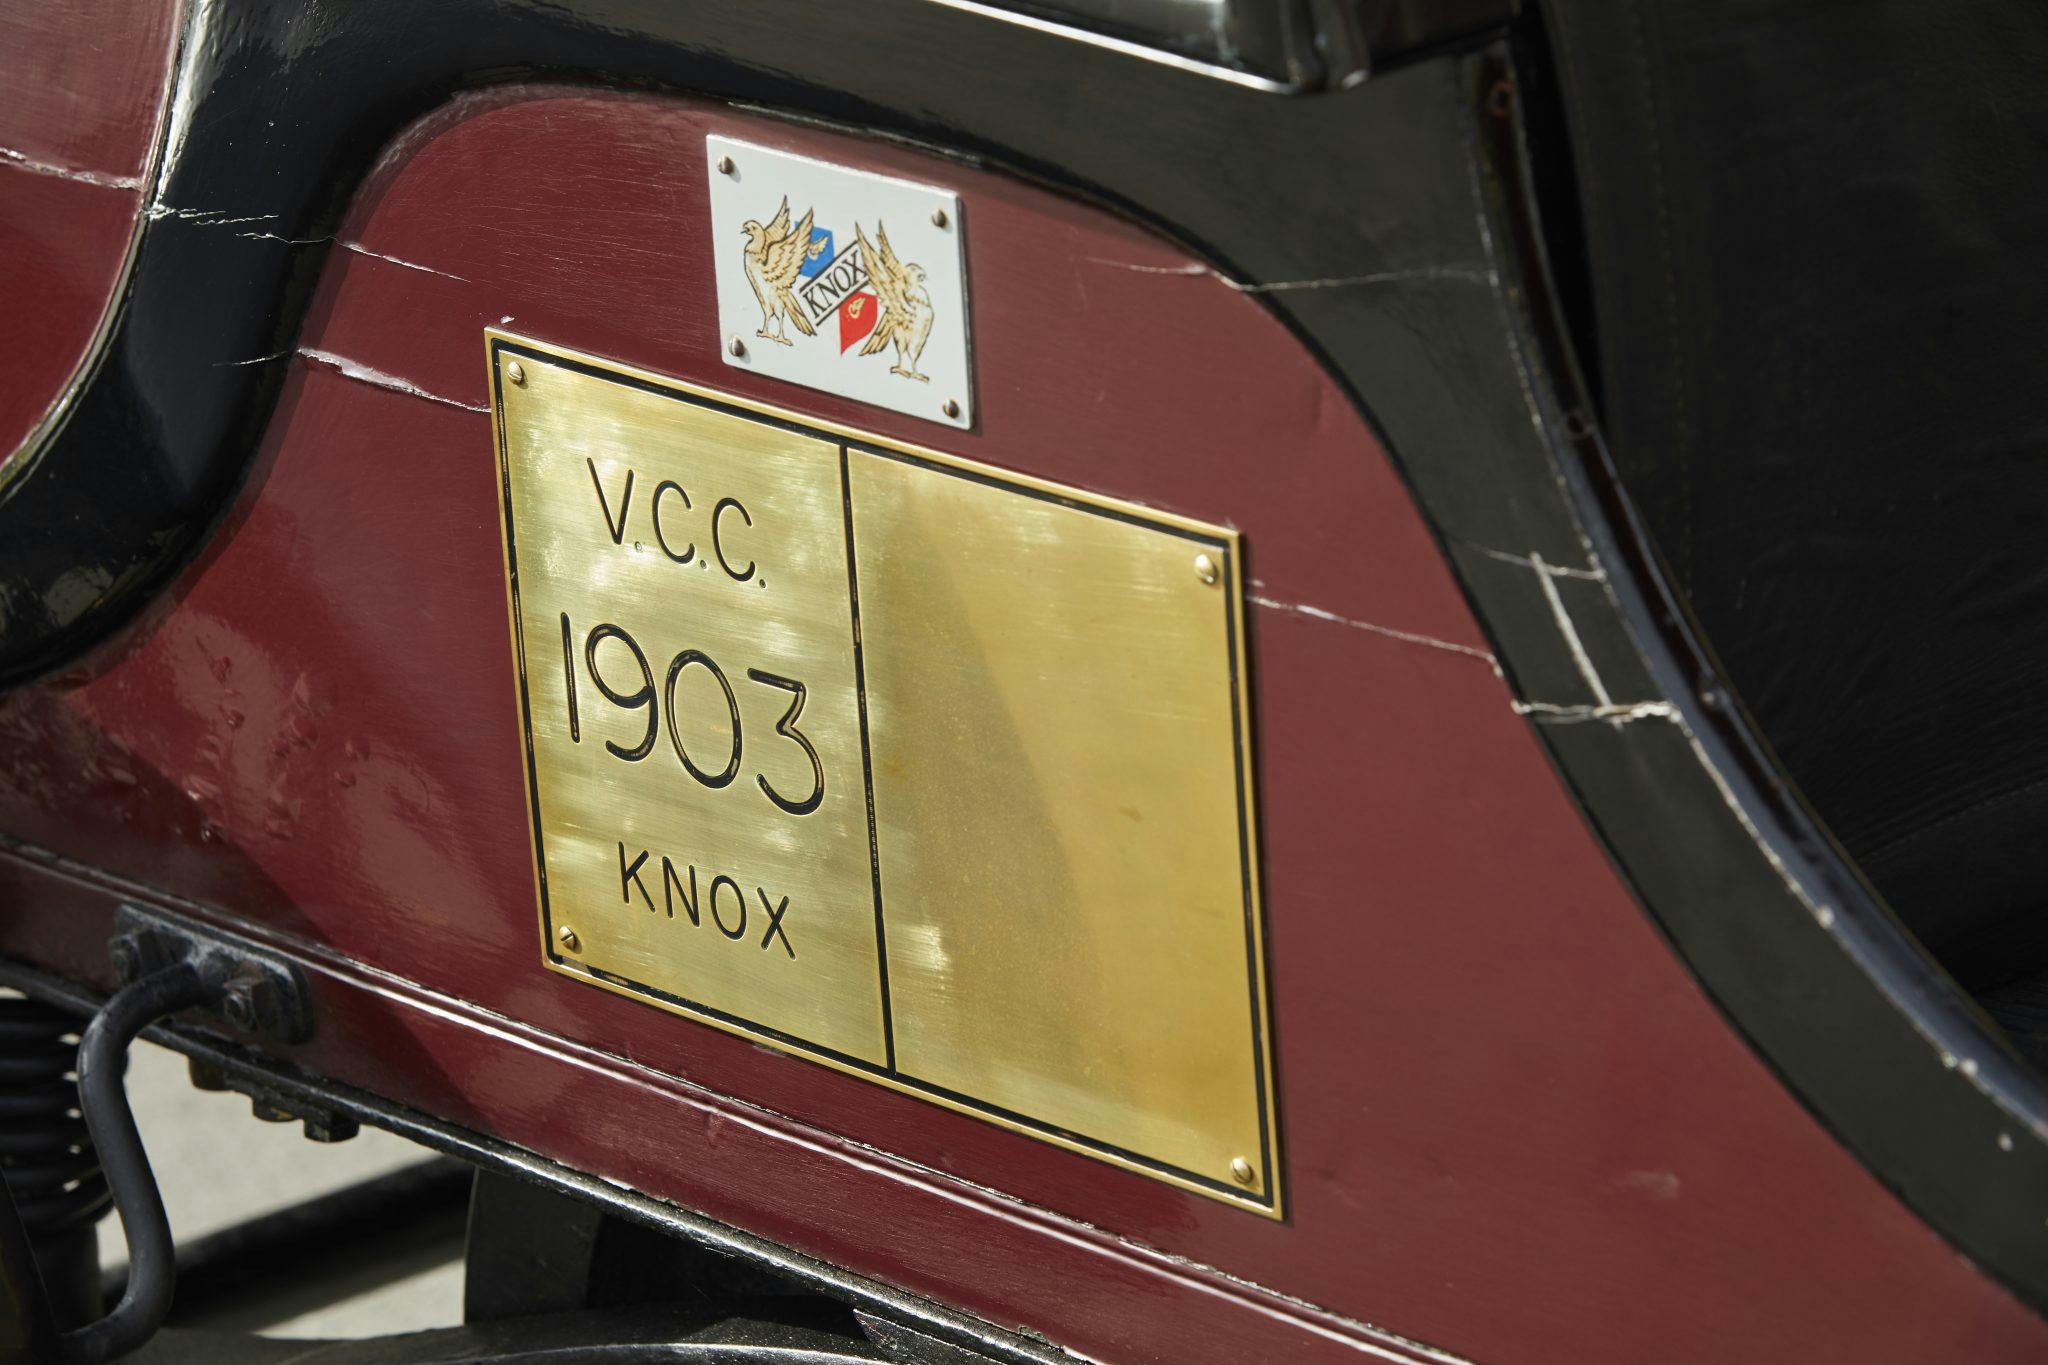 1903 Knox plates